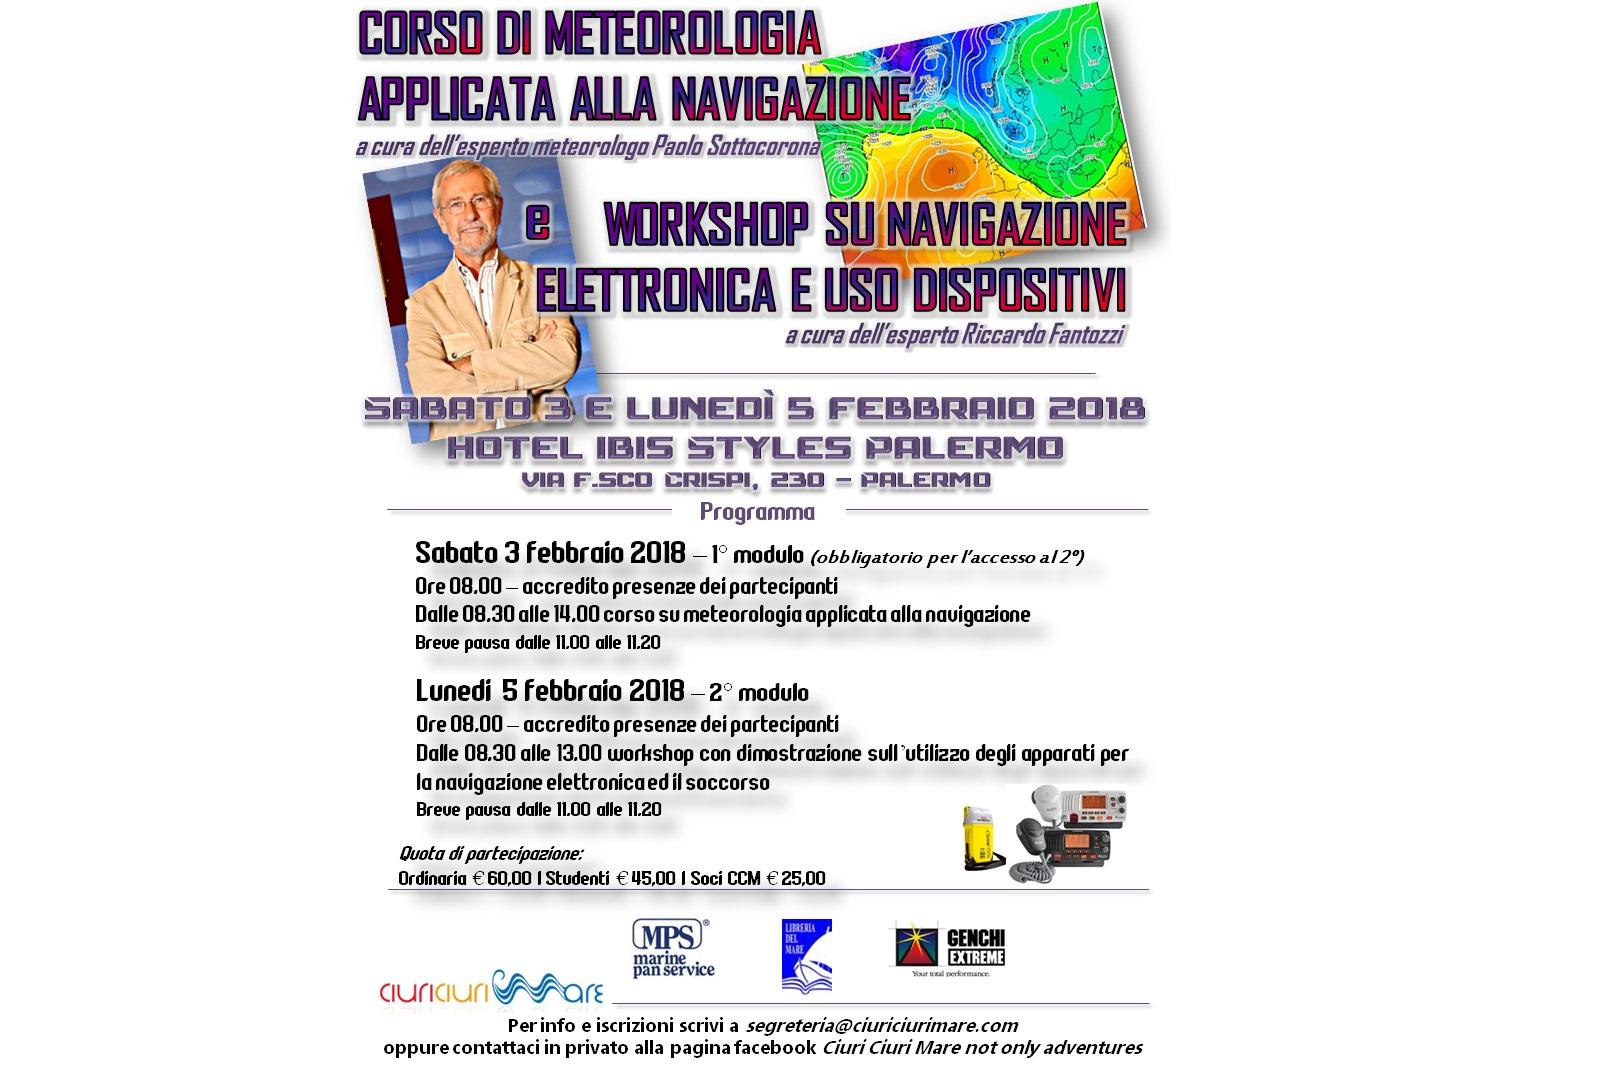 Locandina corso meteo e workshop